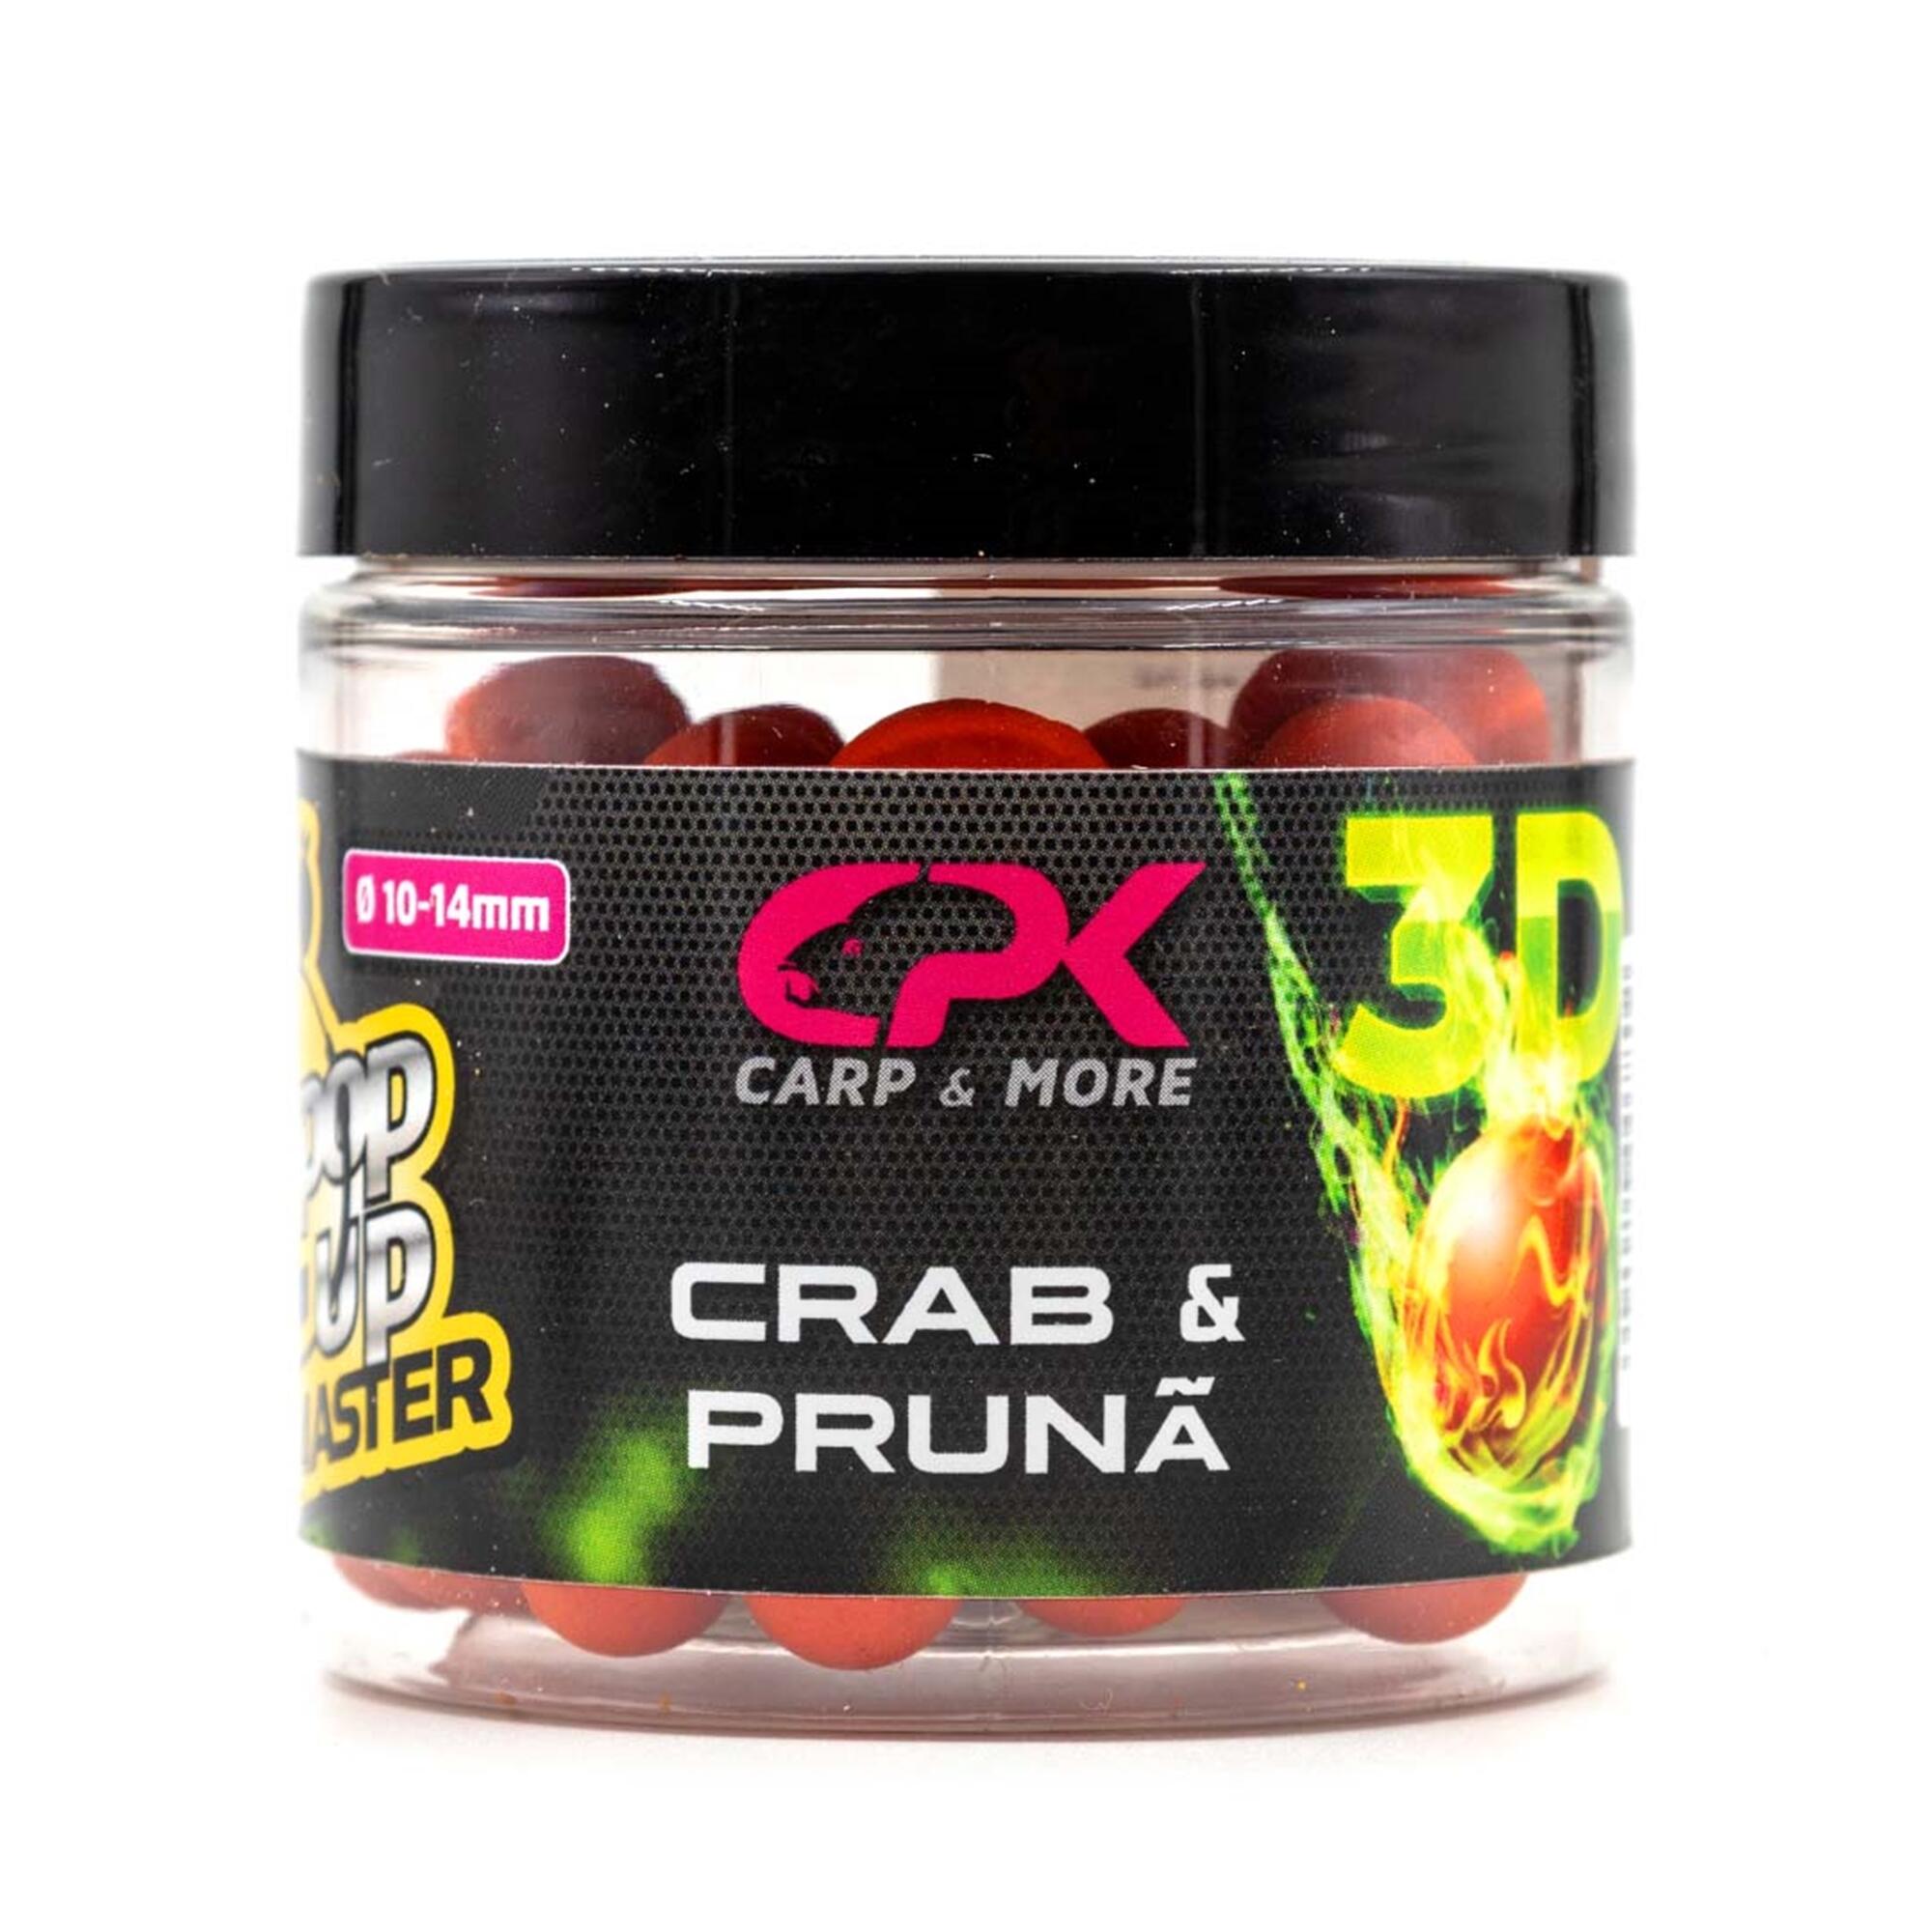 Pop up Crab & Pruna 3D